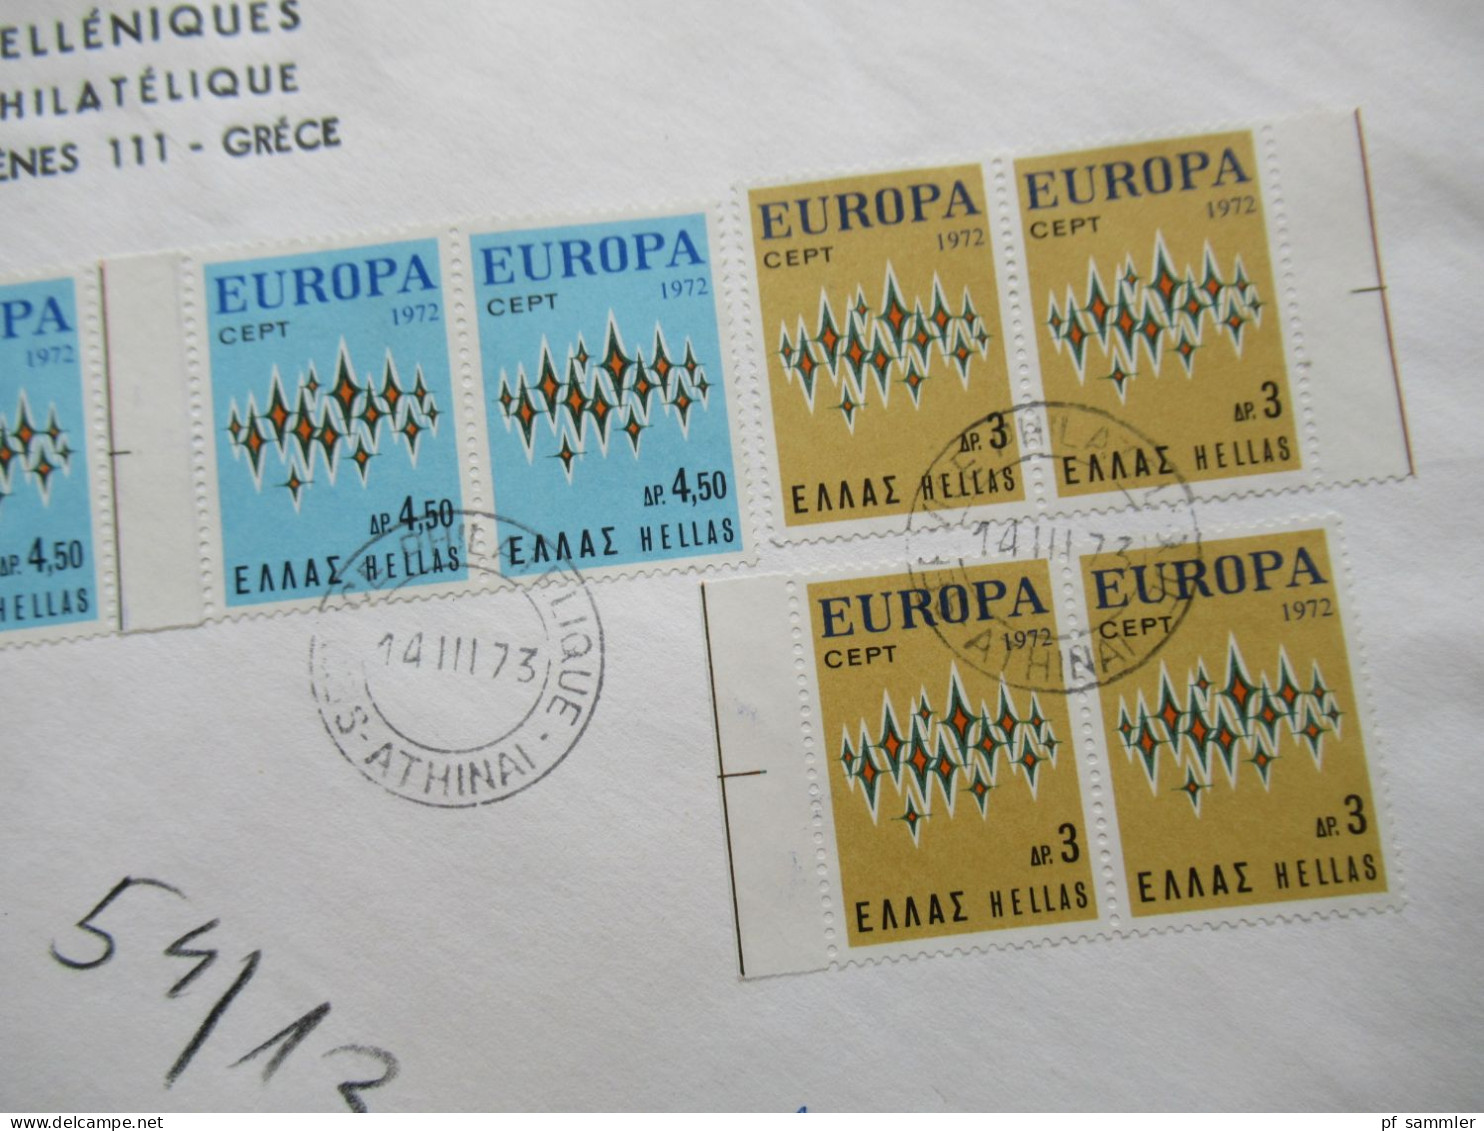 Griechenland Europa Cept 1972 Einschreiben Athinai Postes Helleniques Service Philatelique Nach Bamberg Gesendet - Cartas & Documentos